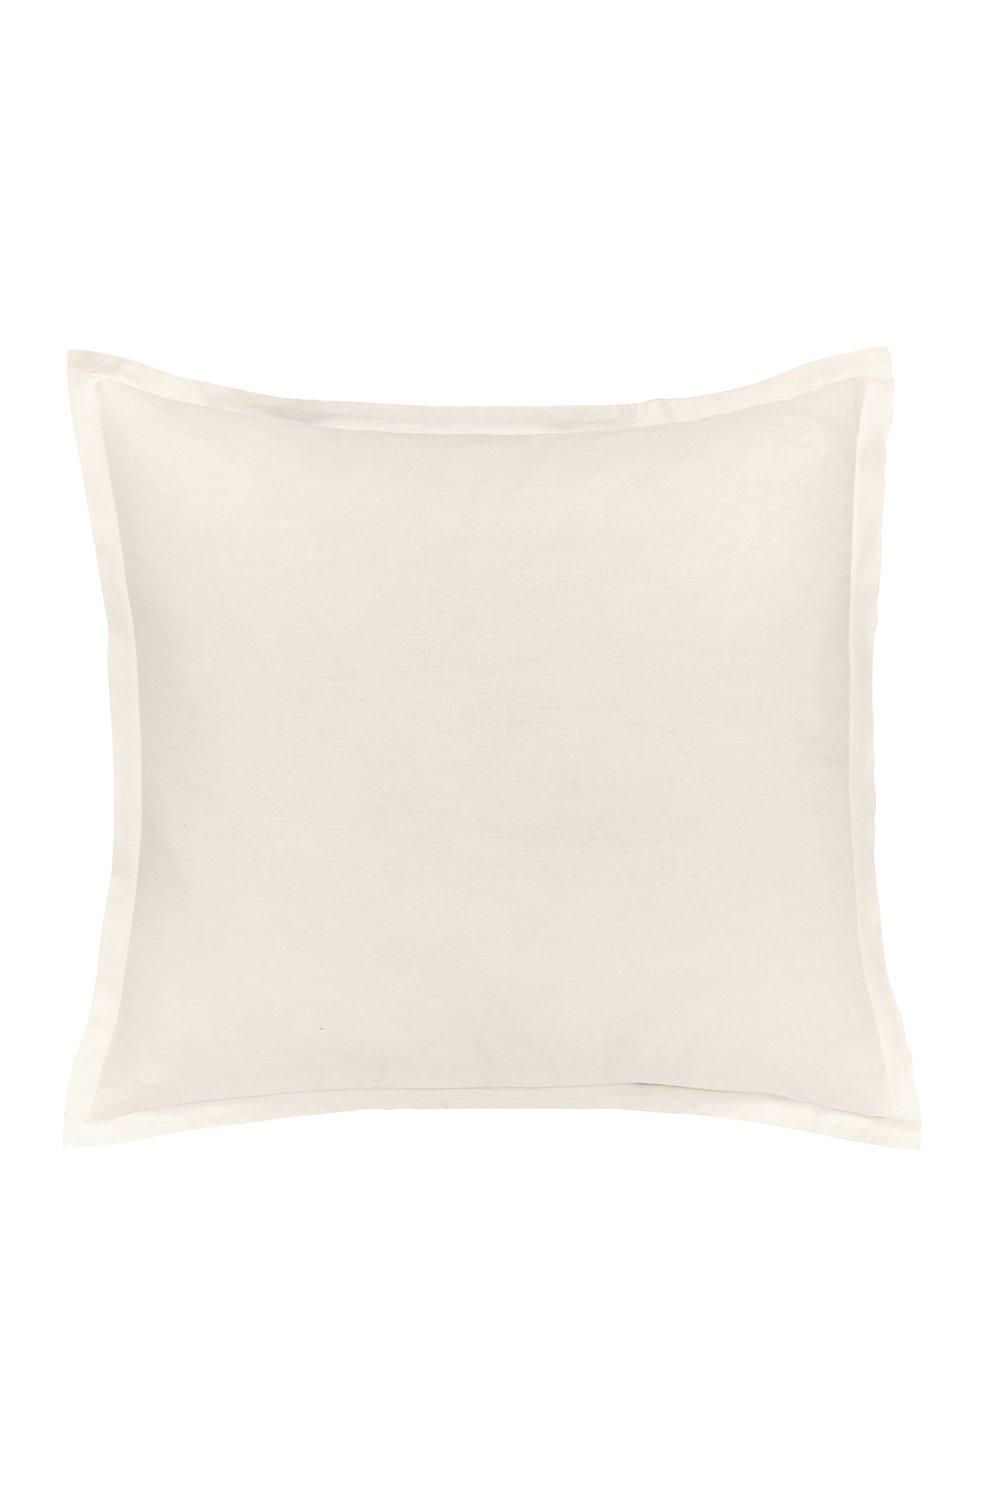 William Morris Pure Linen Cotton Sham Pillowcase, White